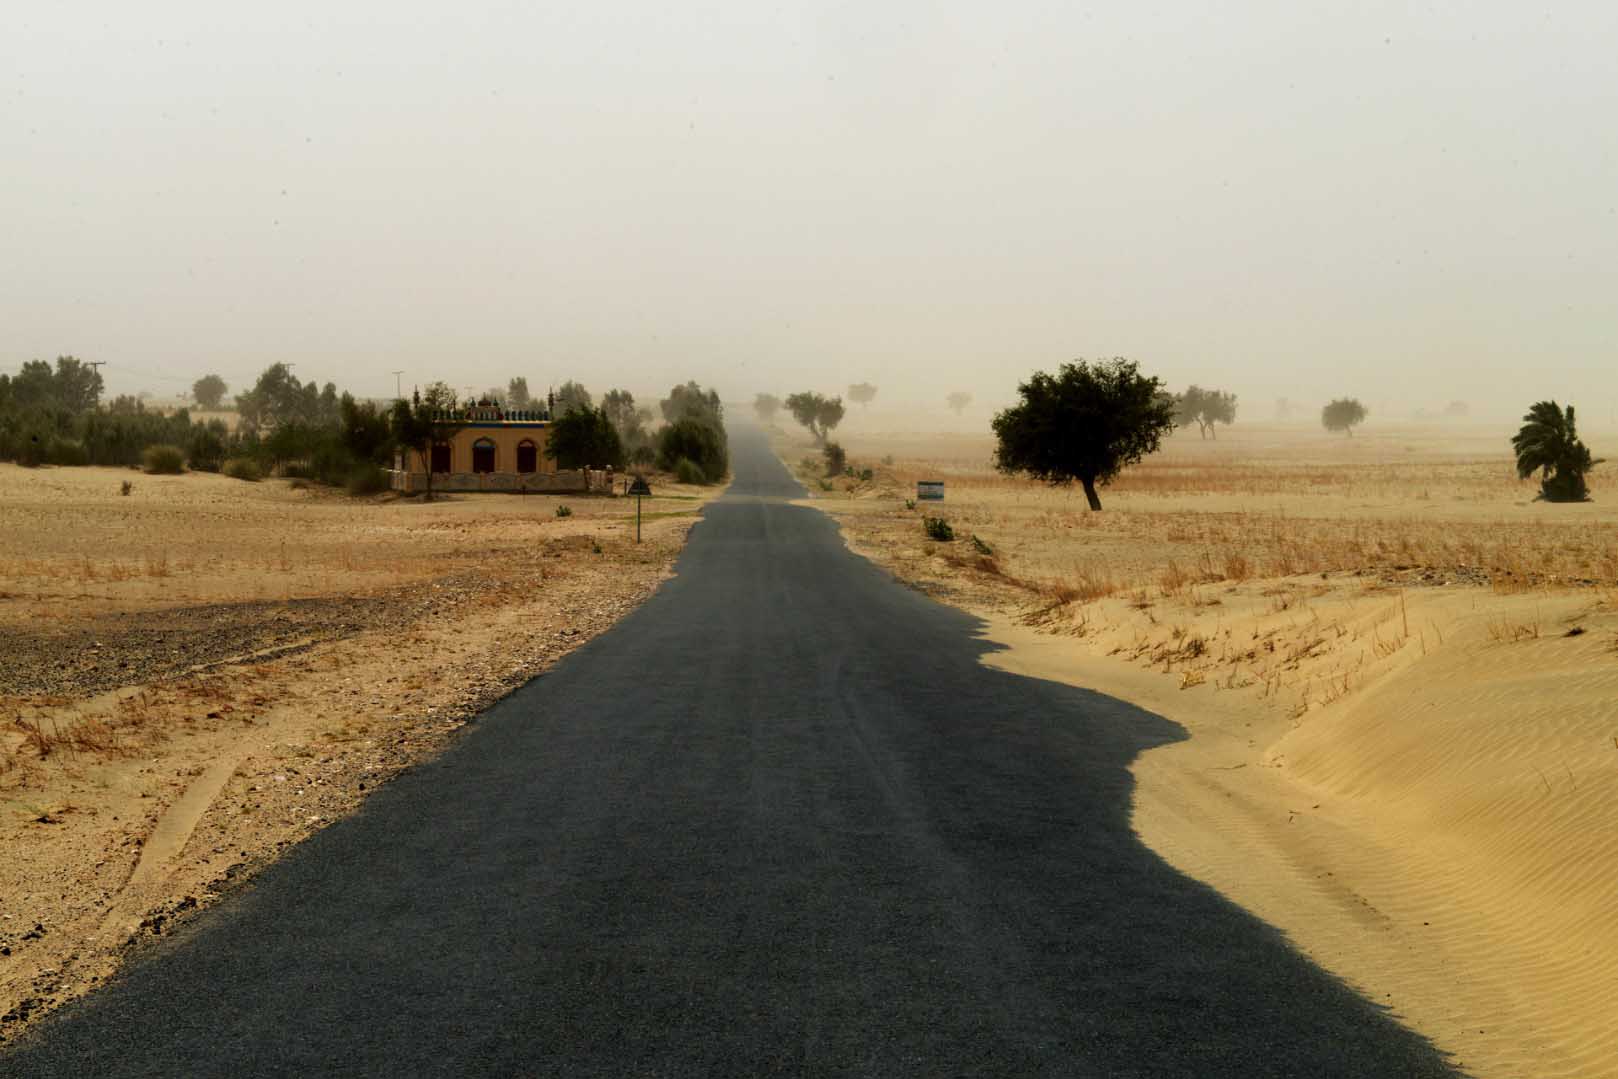 thal desert in pakistan